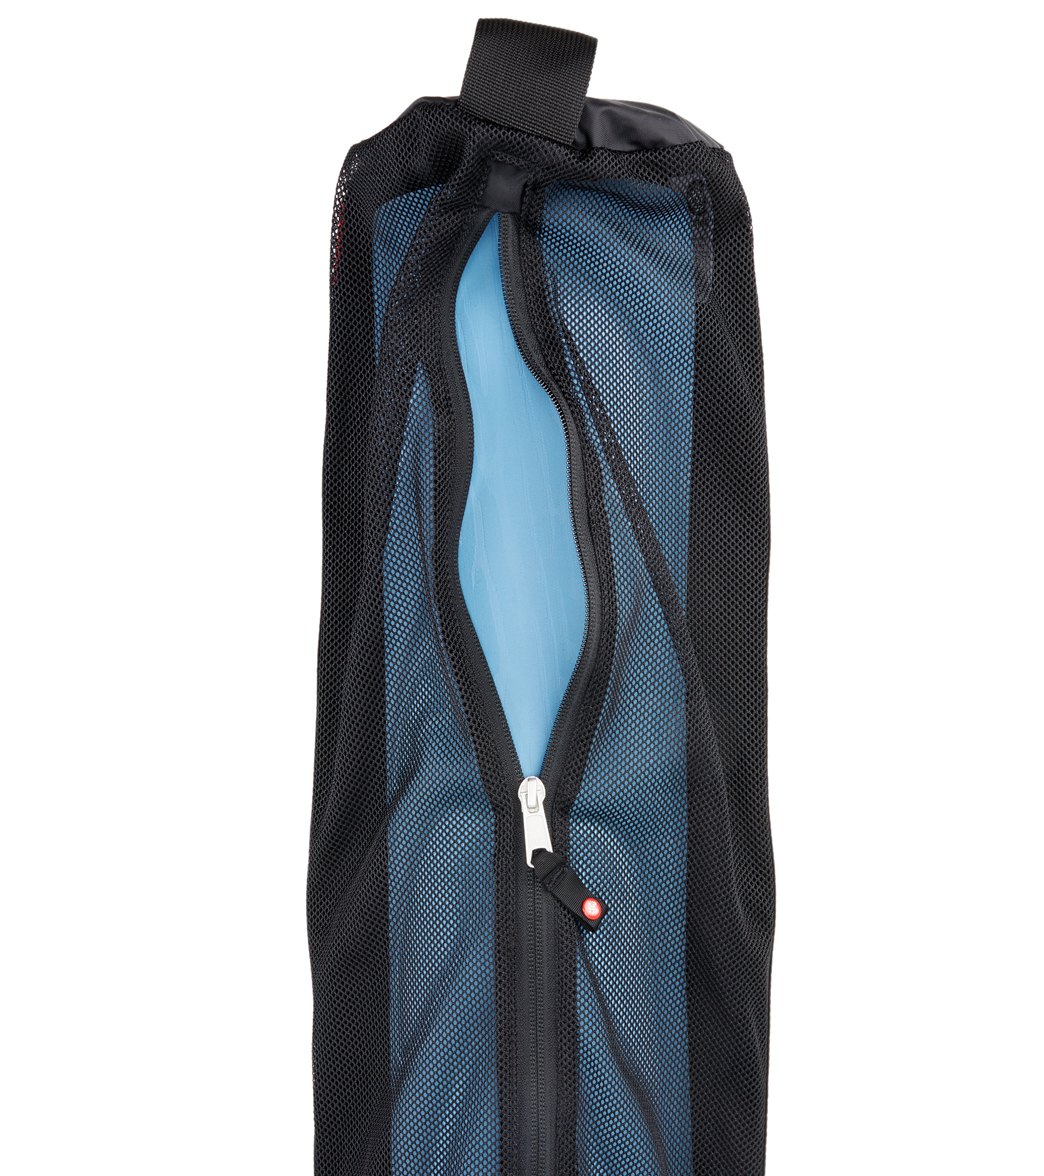 Manduka】Breathe Easy Yoga Bag Mesh Yoga Mat Backpack- Black - Shop  manduka-tw Fitness Accessories - Pinkoi